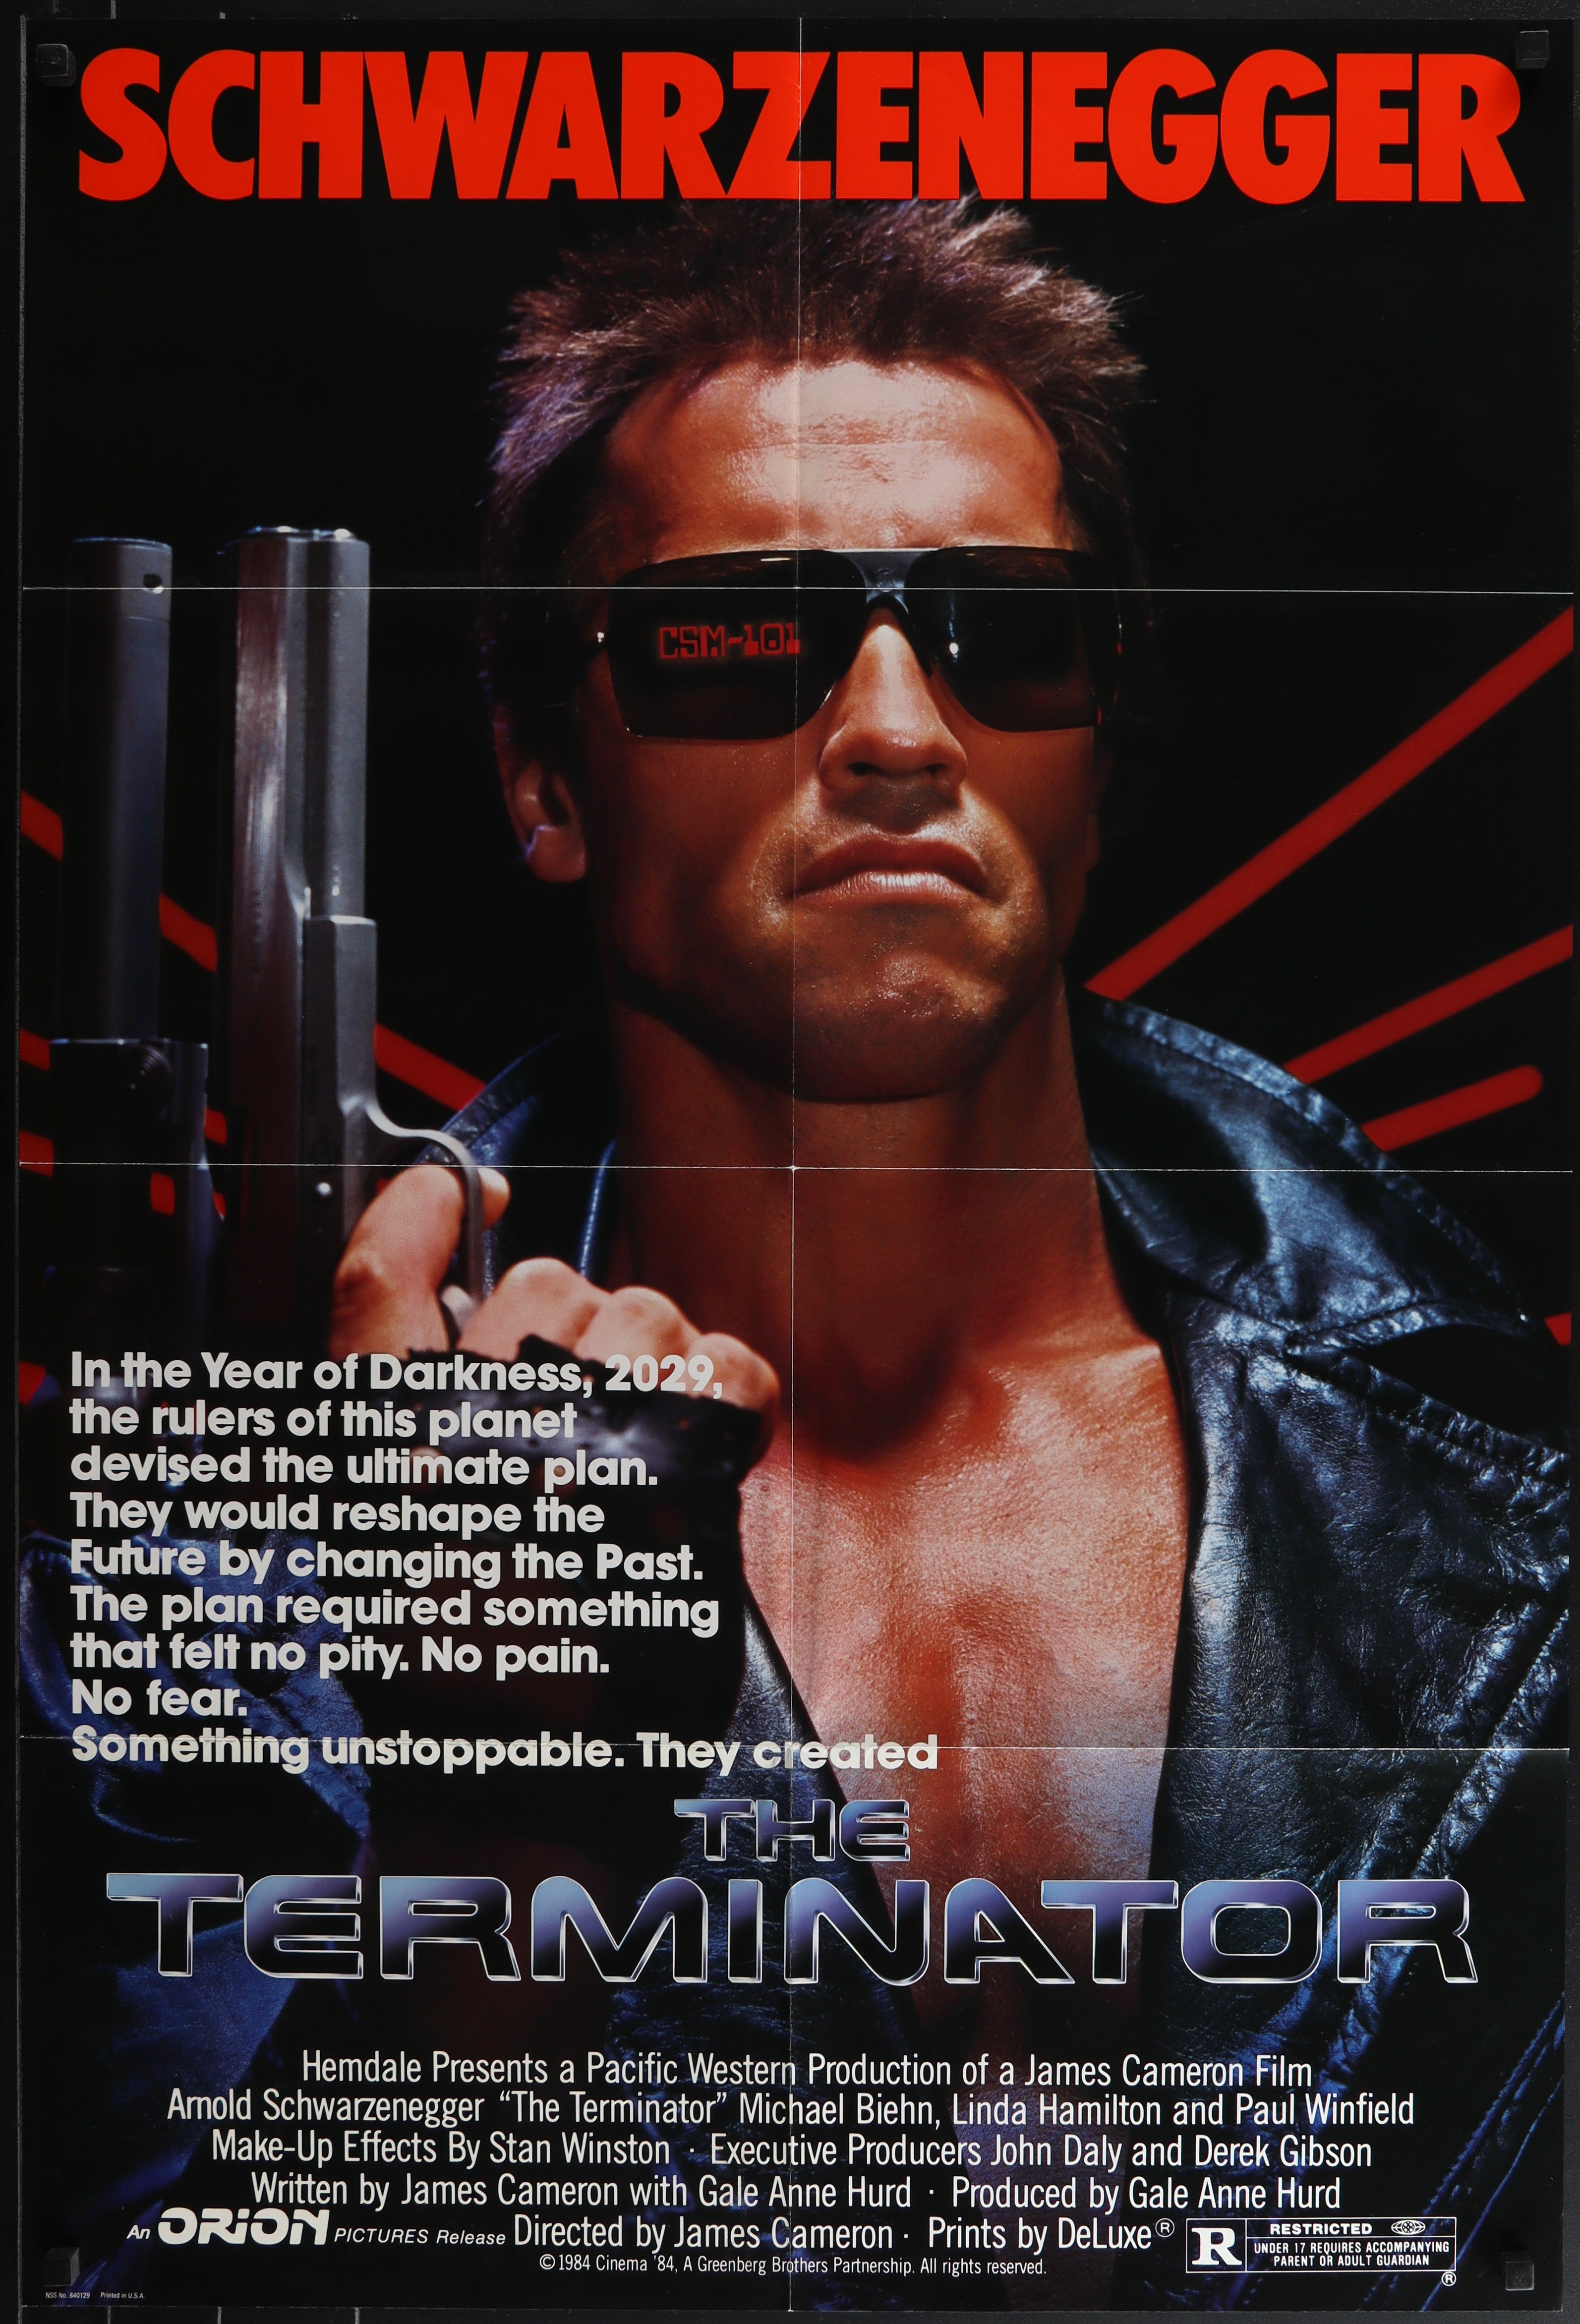 THE TERMINATOR (1984)